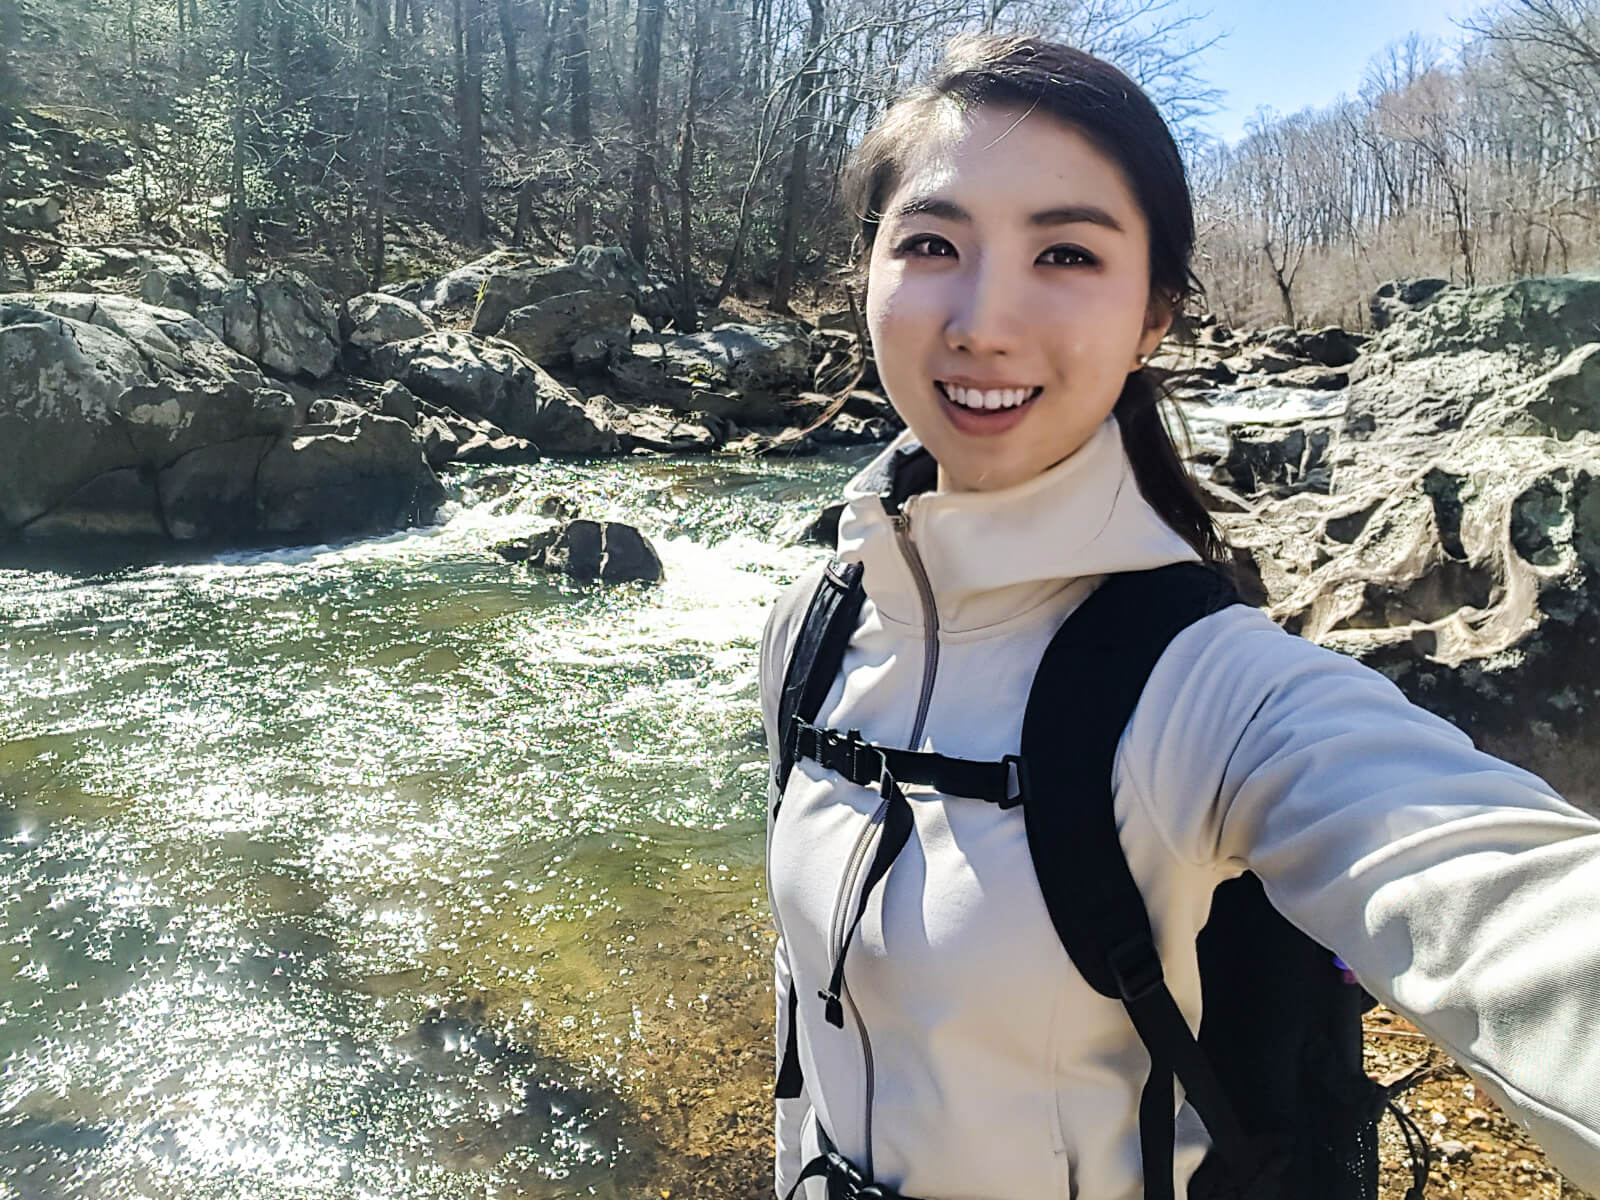 Joyce Youn out hiking